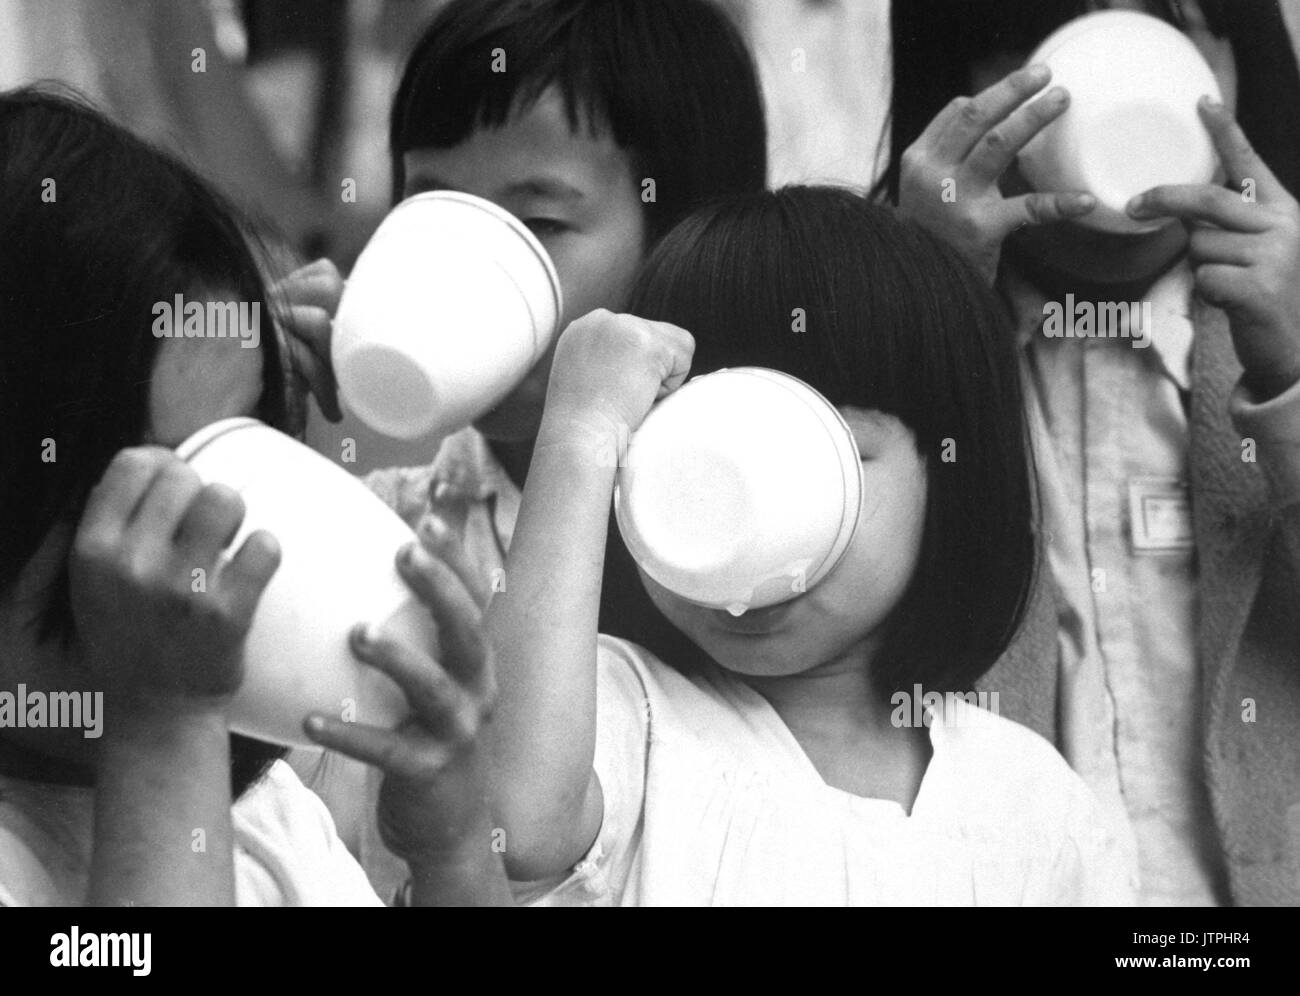 South vietnamesische Kinder. (USIA) genaue Datum schossen Unbekannte NARA DATEI #: 306 - MVP -6-8 Krieg & Konflikt Buch Nr.: 410 Stockfoto